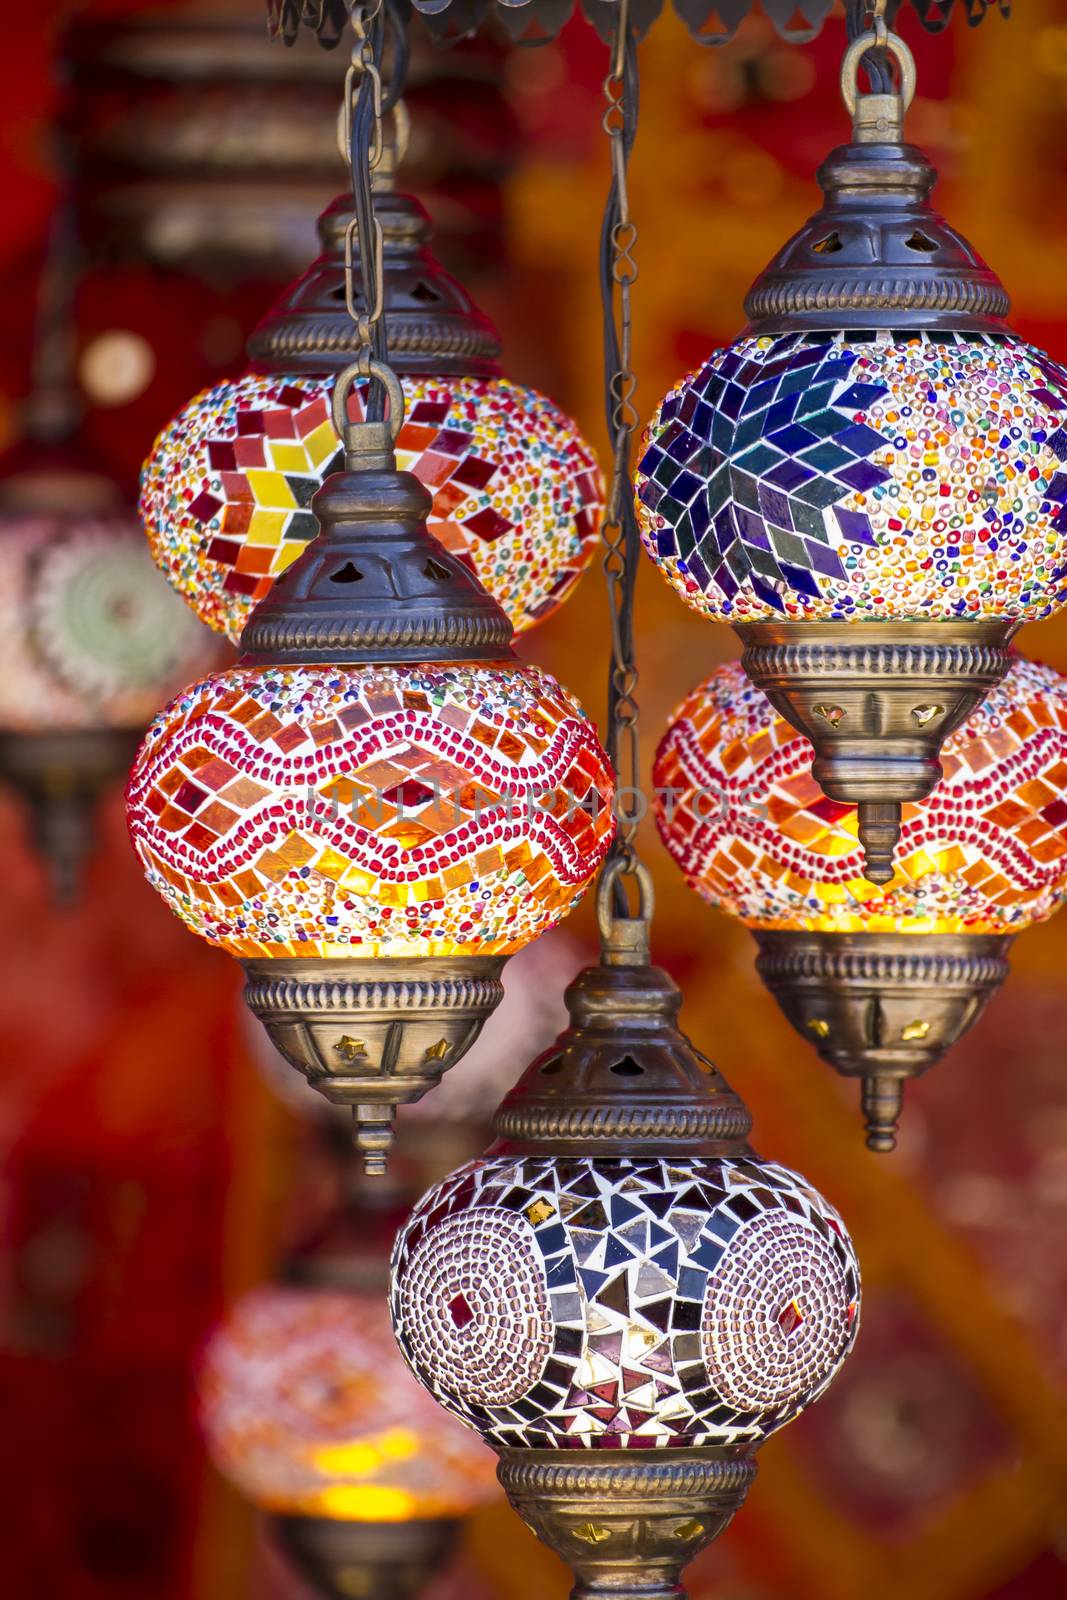 Decorative, Oriental style lamps craft in a bazaar by FernandoCortes